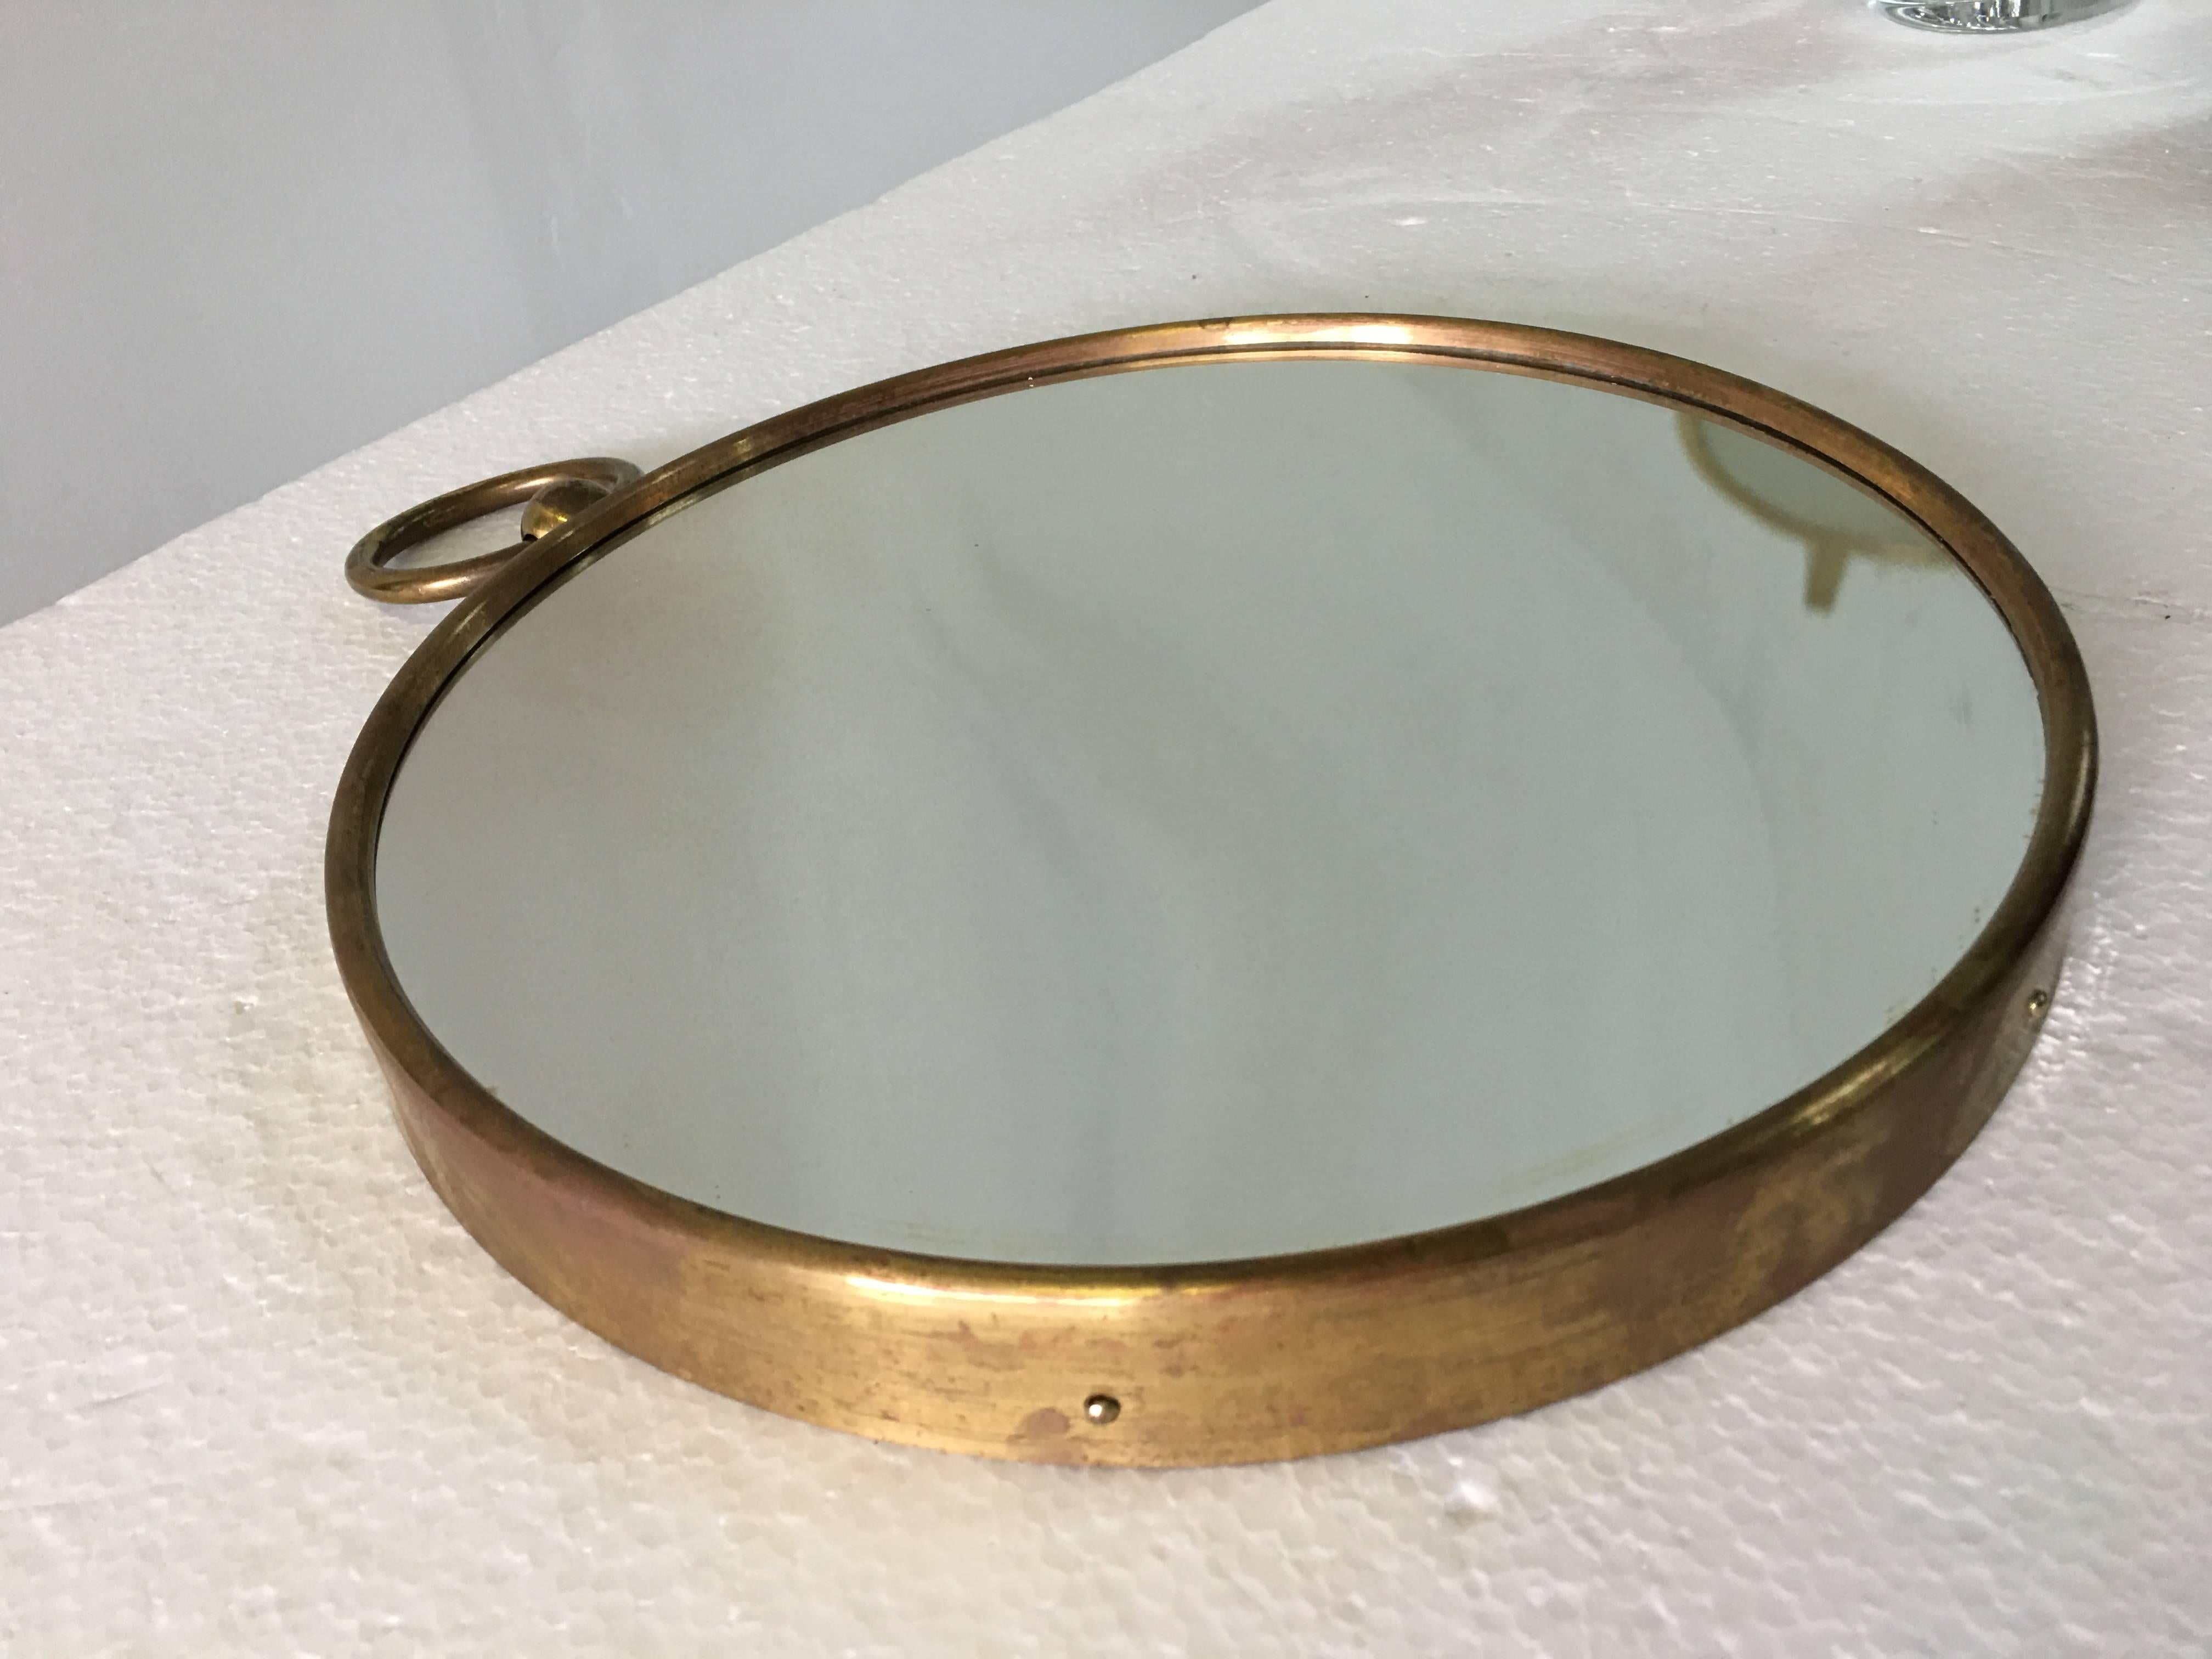 A neoclassical, convex, brass-rimmed mirror, circa 1950 by Piero Fornasetti. Original sticker on the back. Documentation: Similar mirror reproduced in situ - Villa di Varenna, furnished by Fornasetti, 